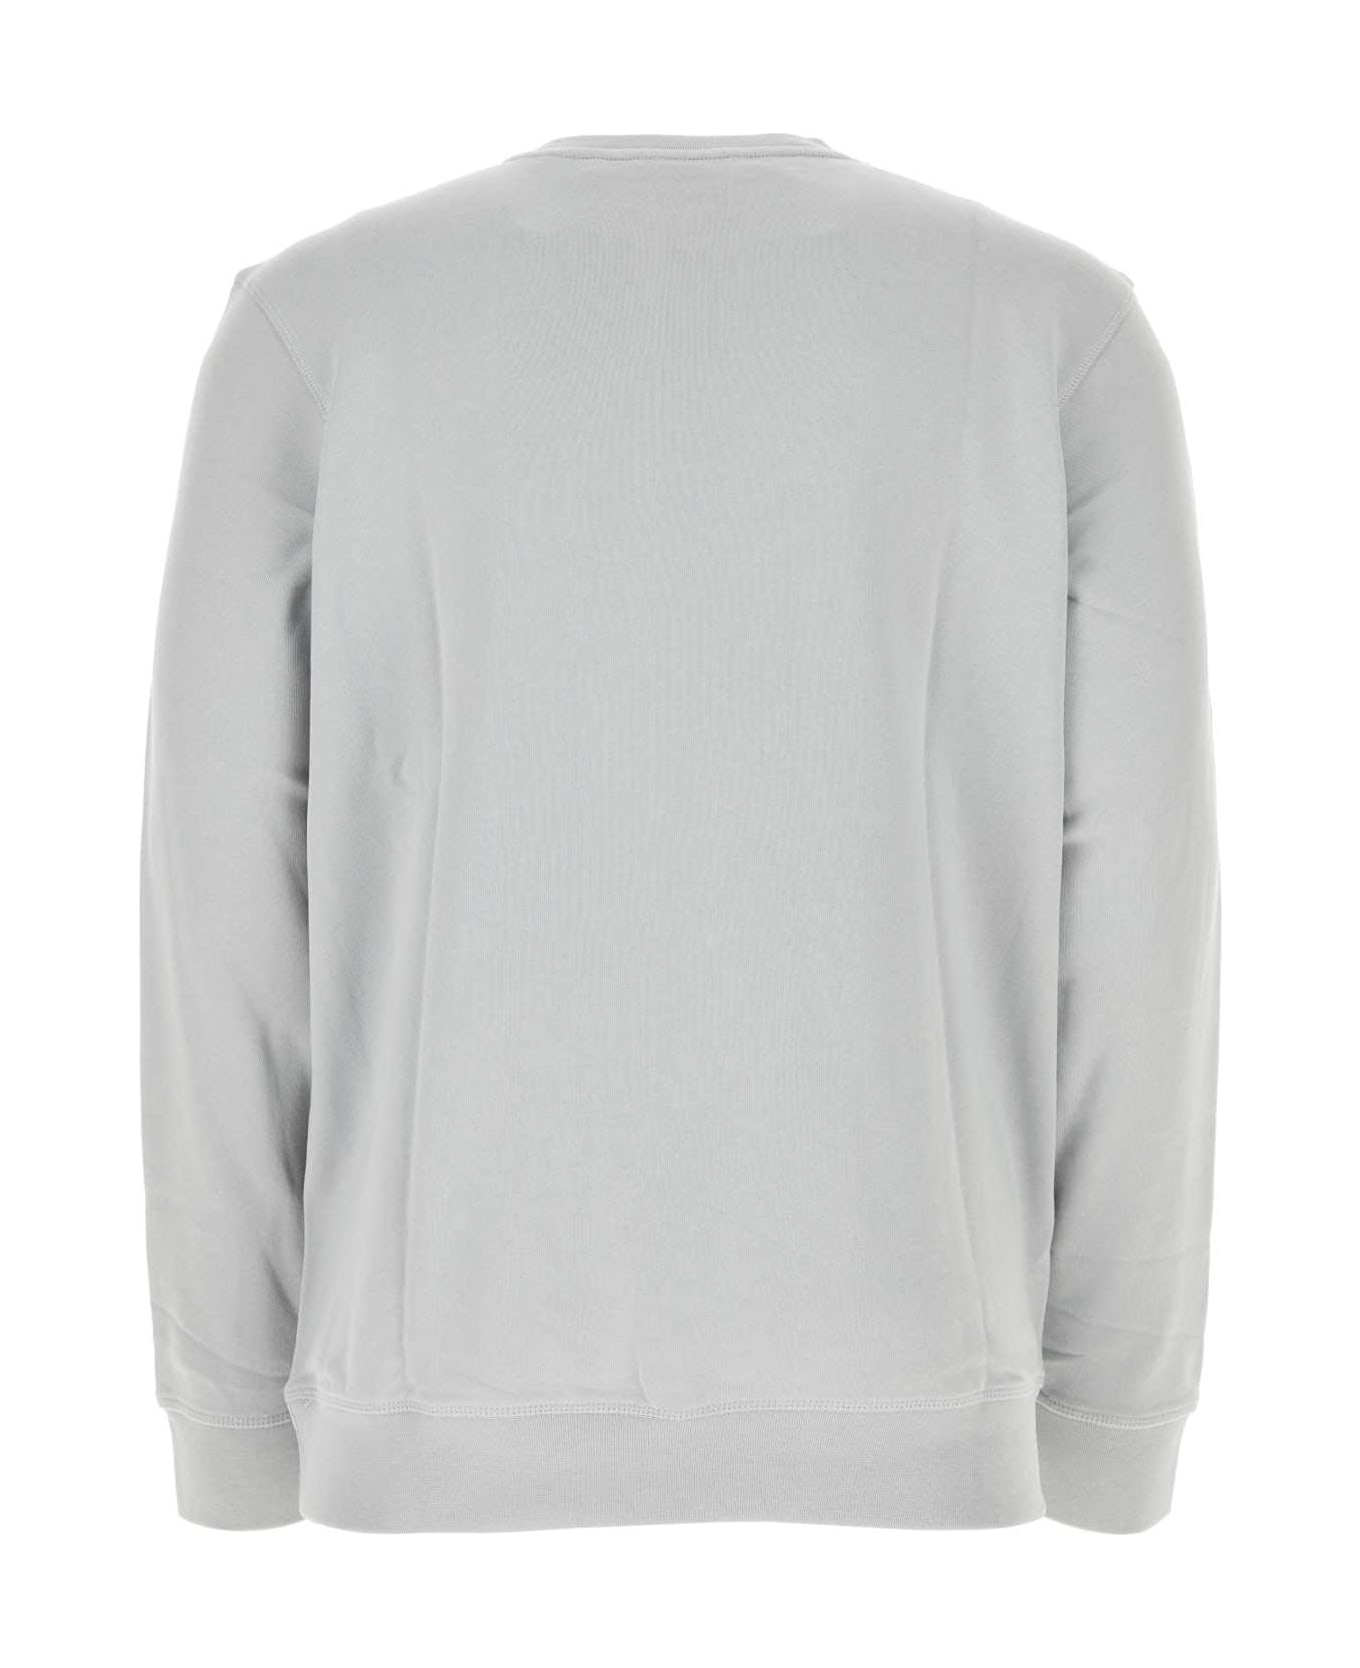 Hugo Boss Light Grey Cotton Sweatshirt - LIGHTPASTELGREY